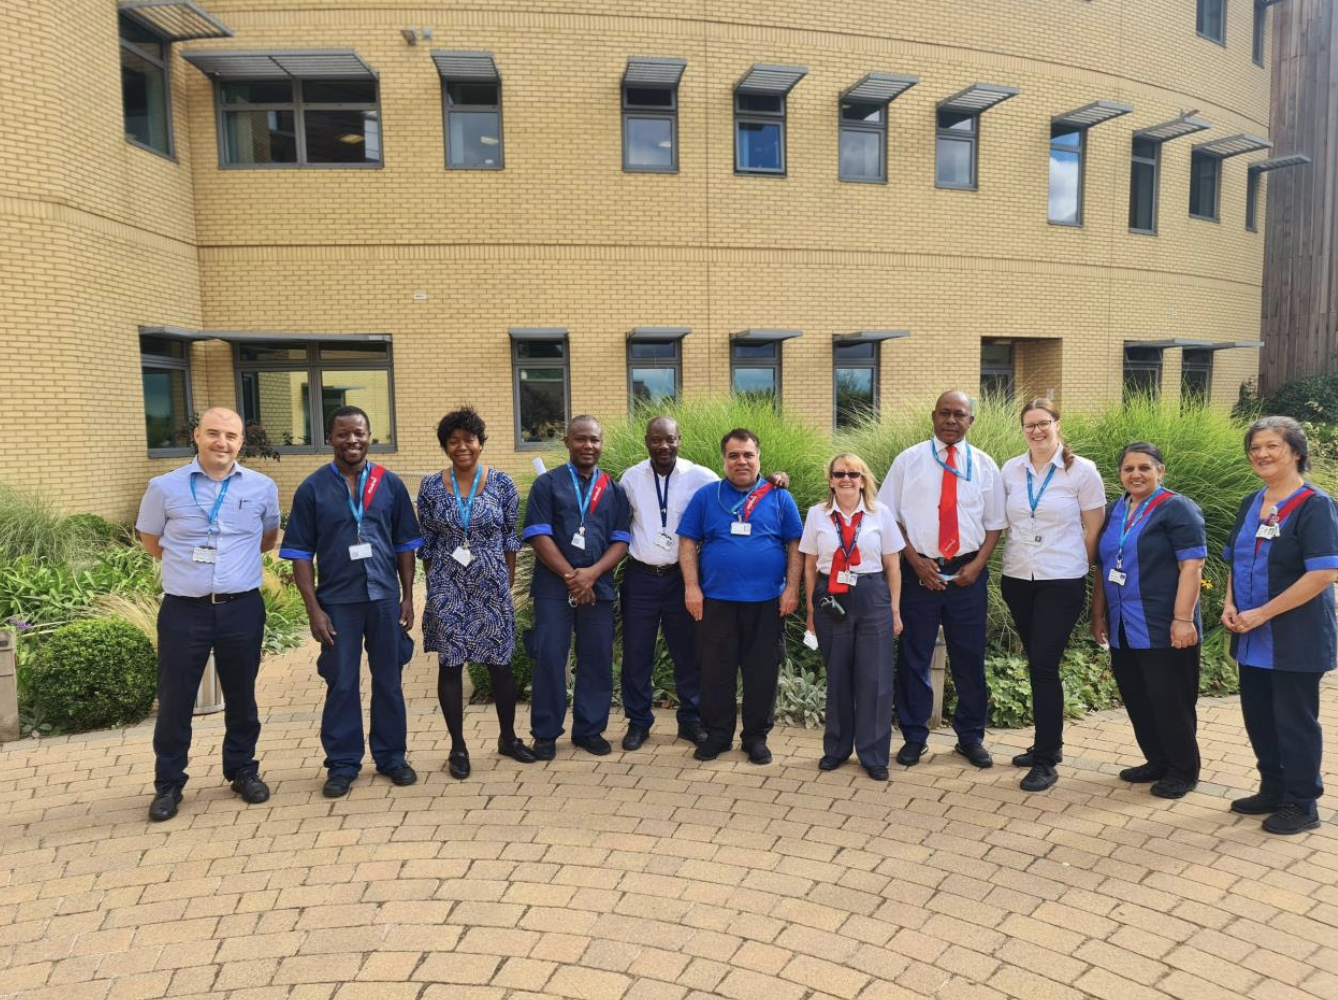 Sodexo Hospital Team Wins Cleaning Award